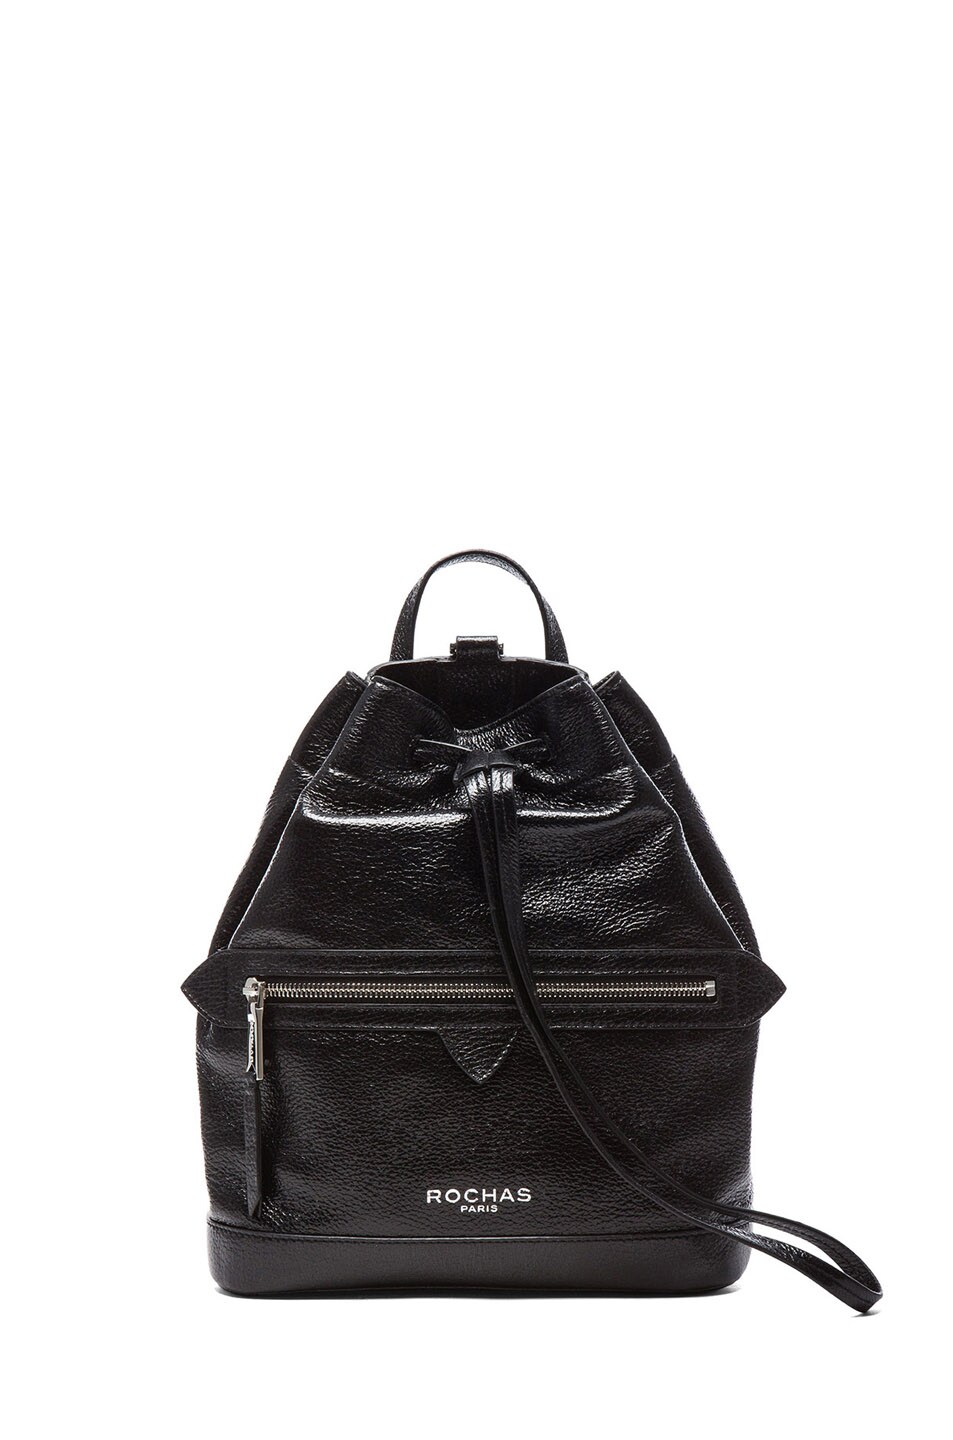 Image 1 of ROCHAS Karina Backpack in Black